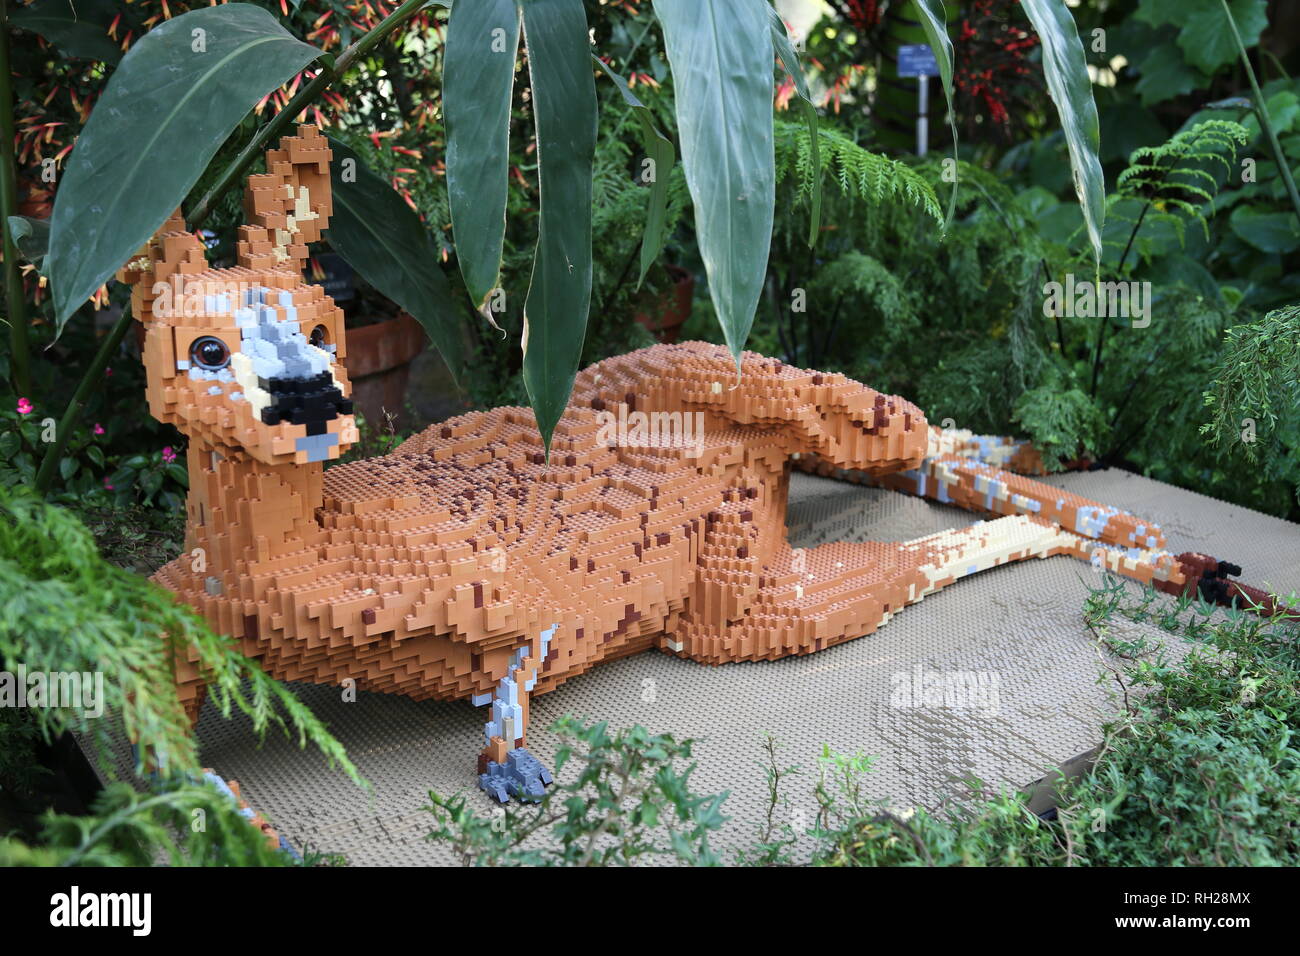 Lego kangaroo hi-res stock photography and images - Alamy